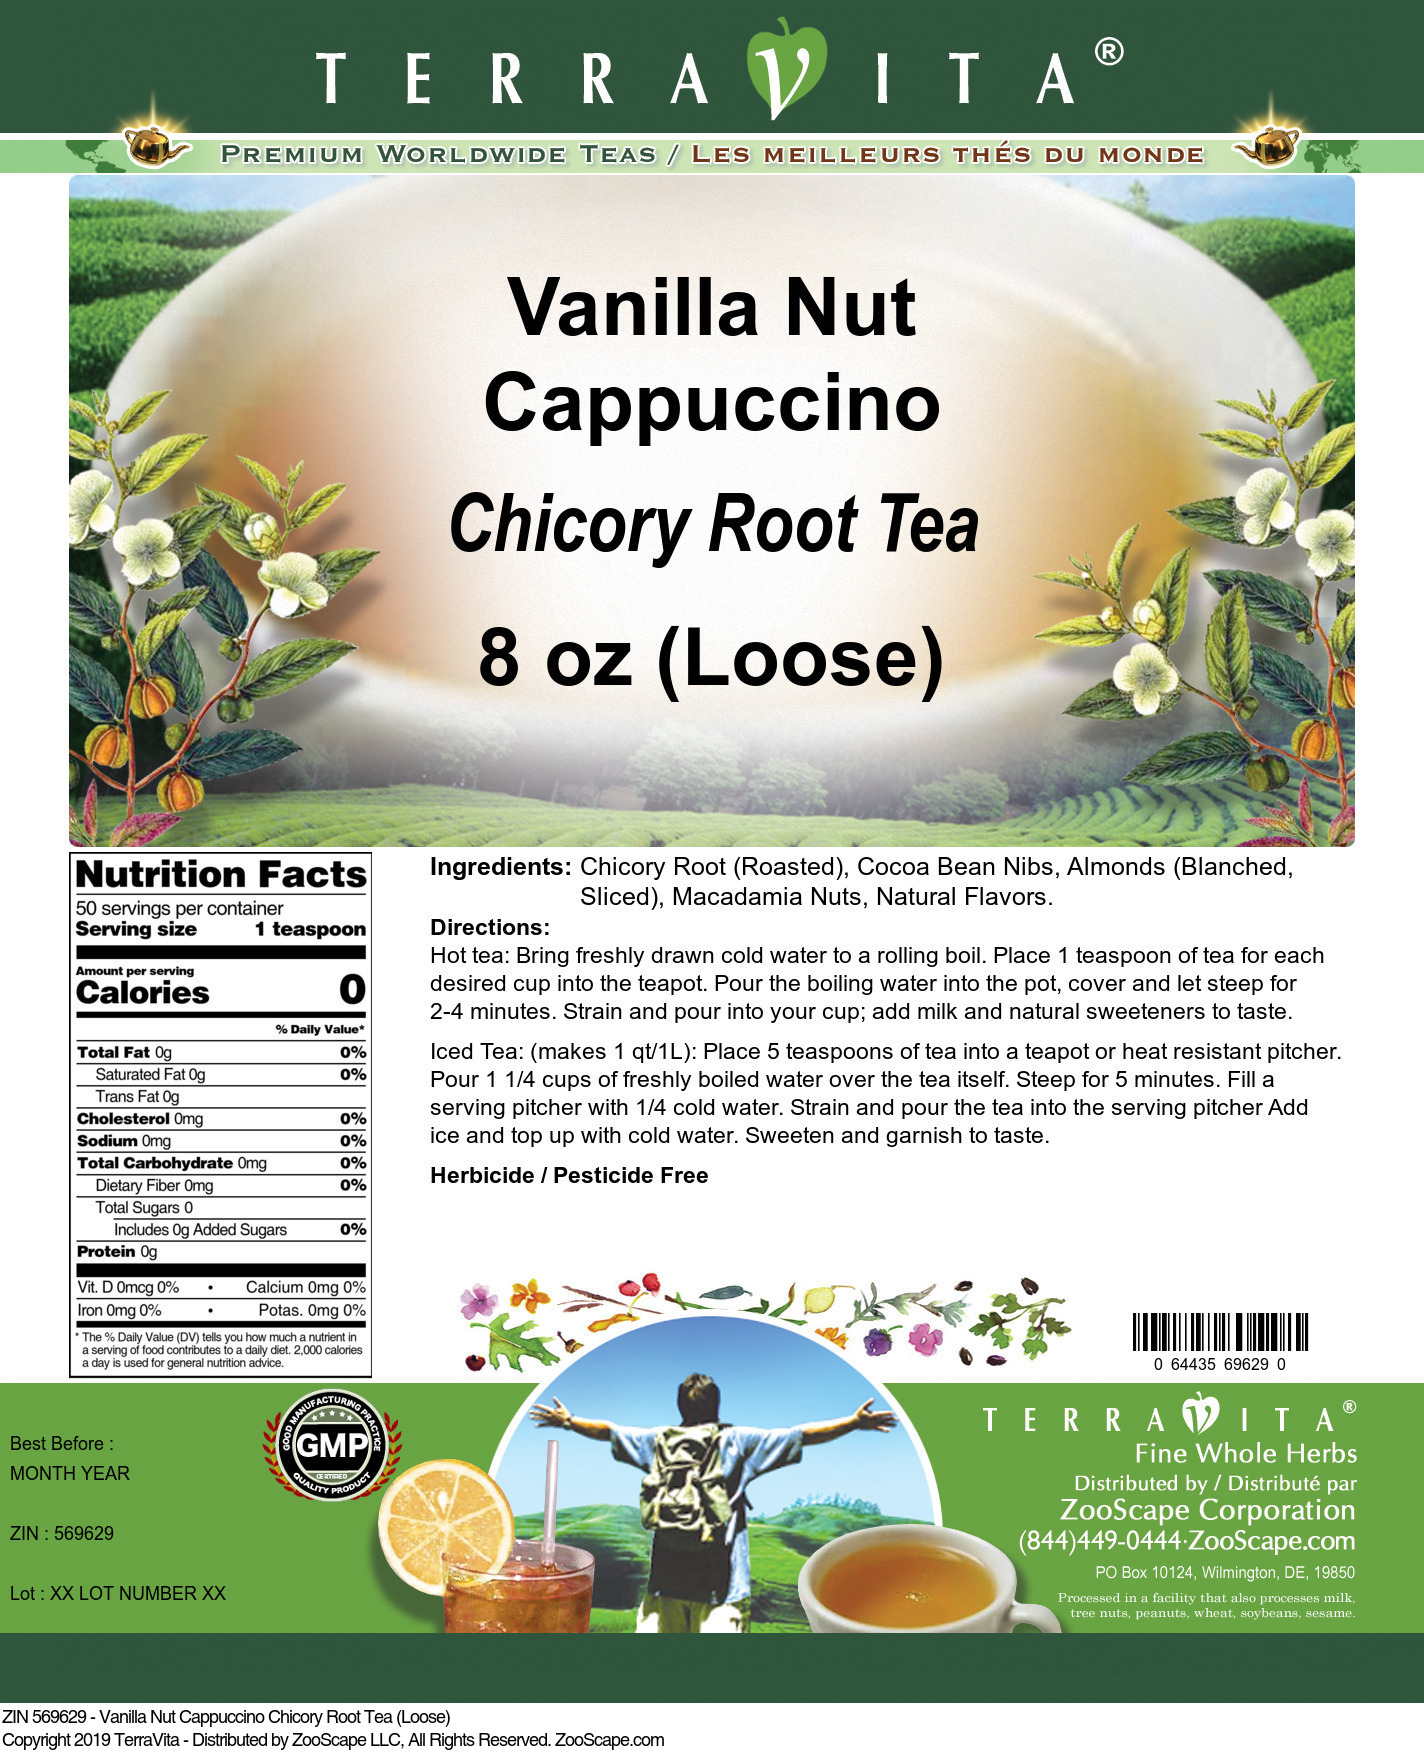 Vanilla Nut Cappuccino Chicory Root Tea (Loose) - Label